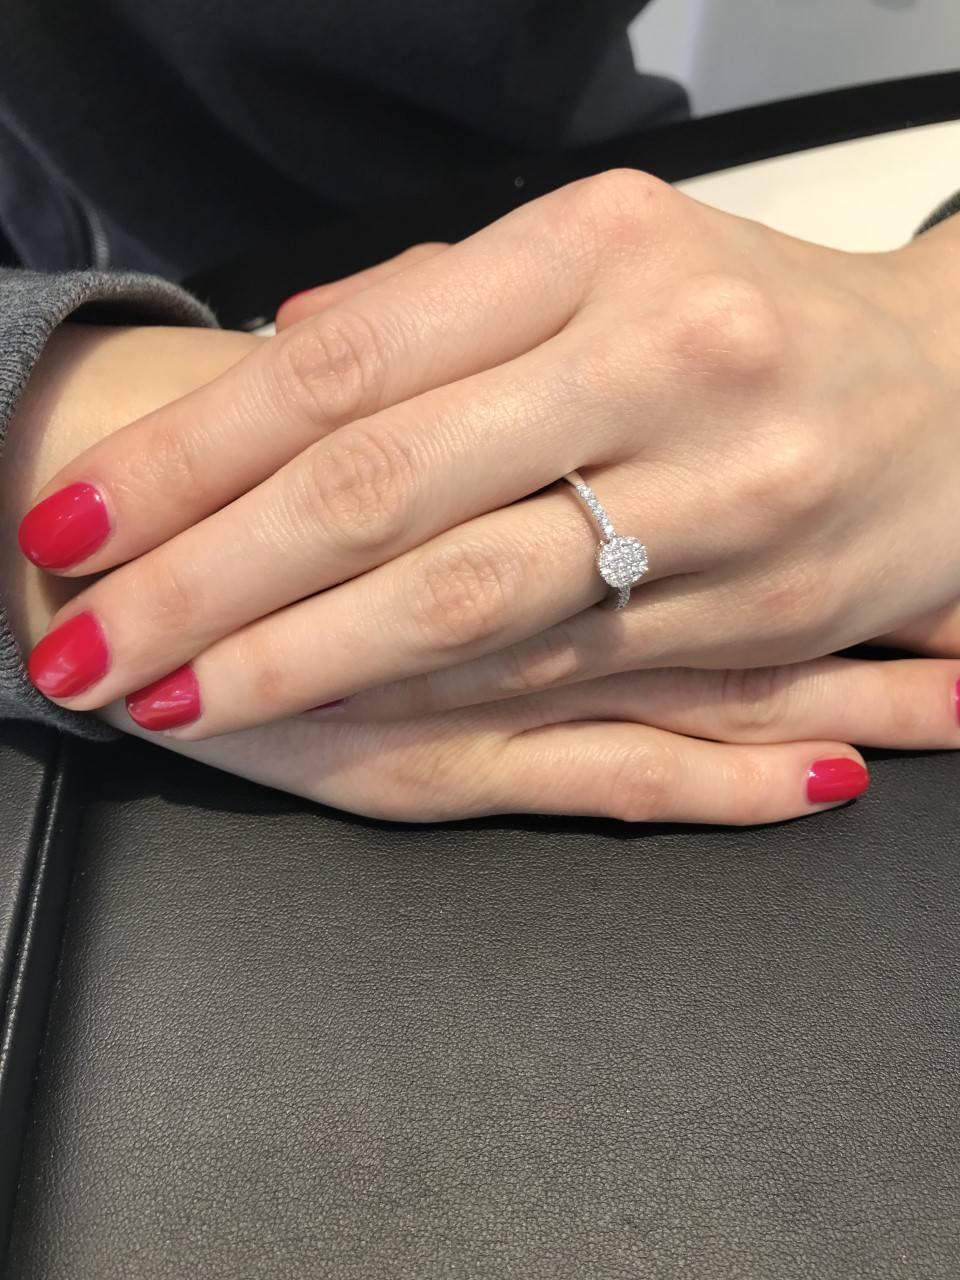 0.33 carat radiant cut diamond ring